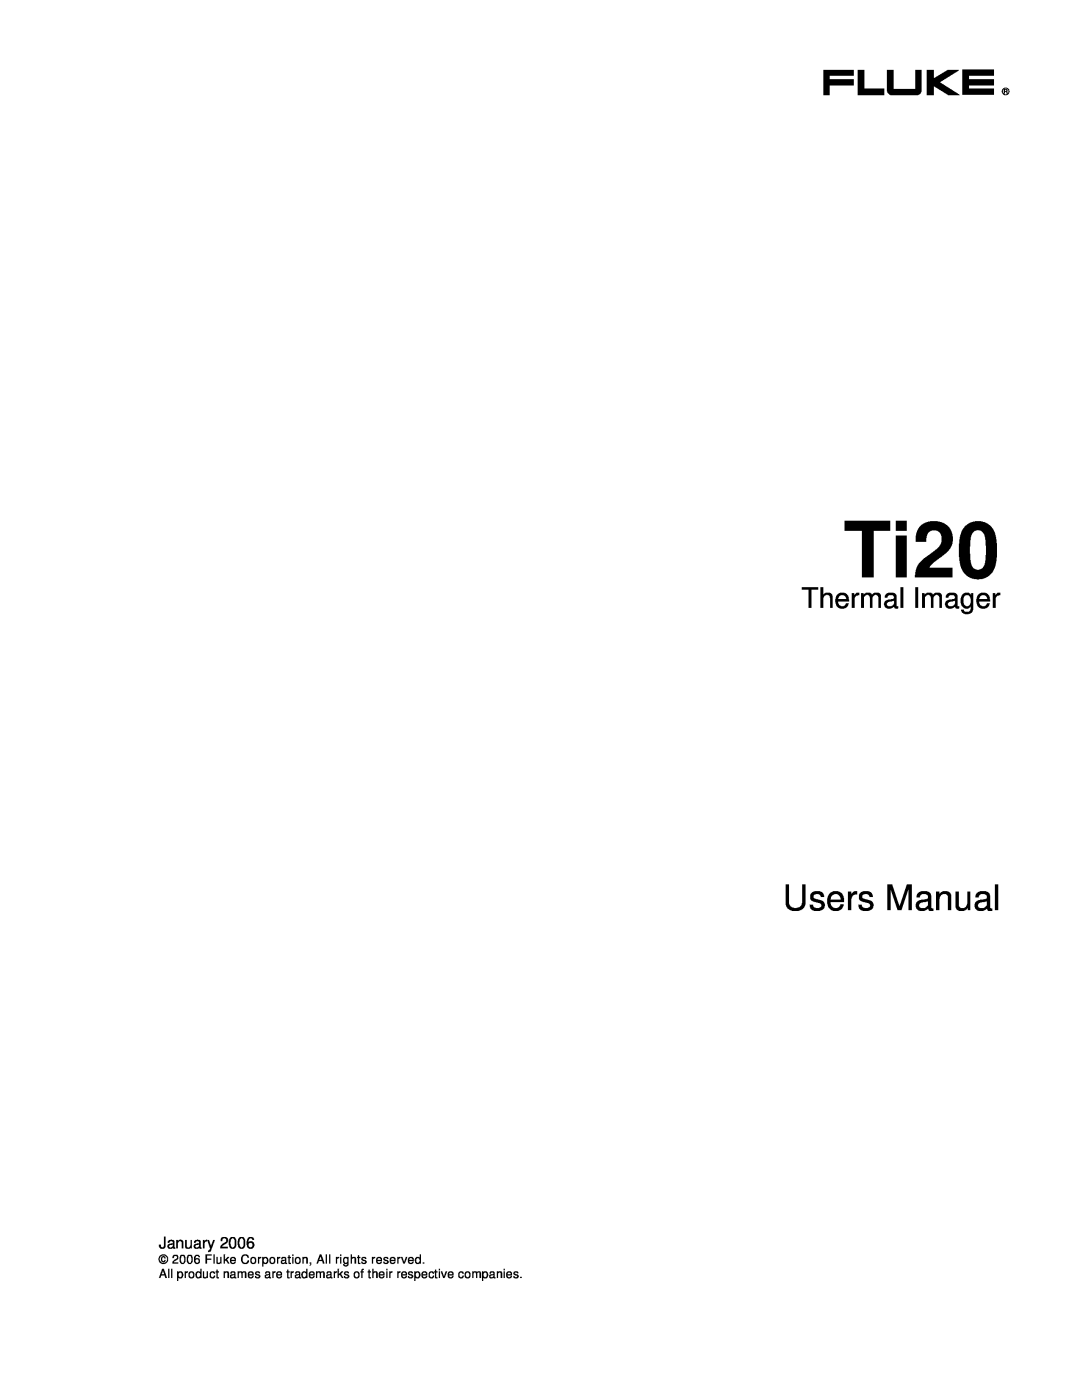 Fluke Ti20 user manual Thermal Imager, Fluke Corporation, All rights reserved 